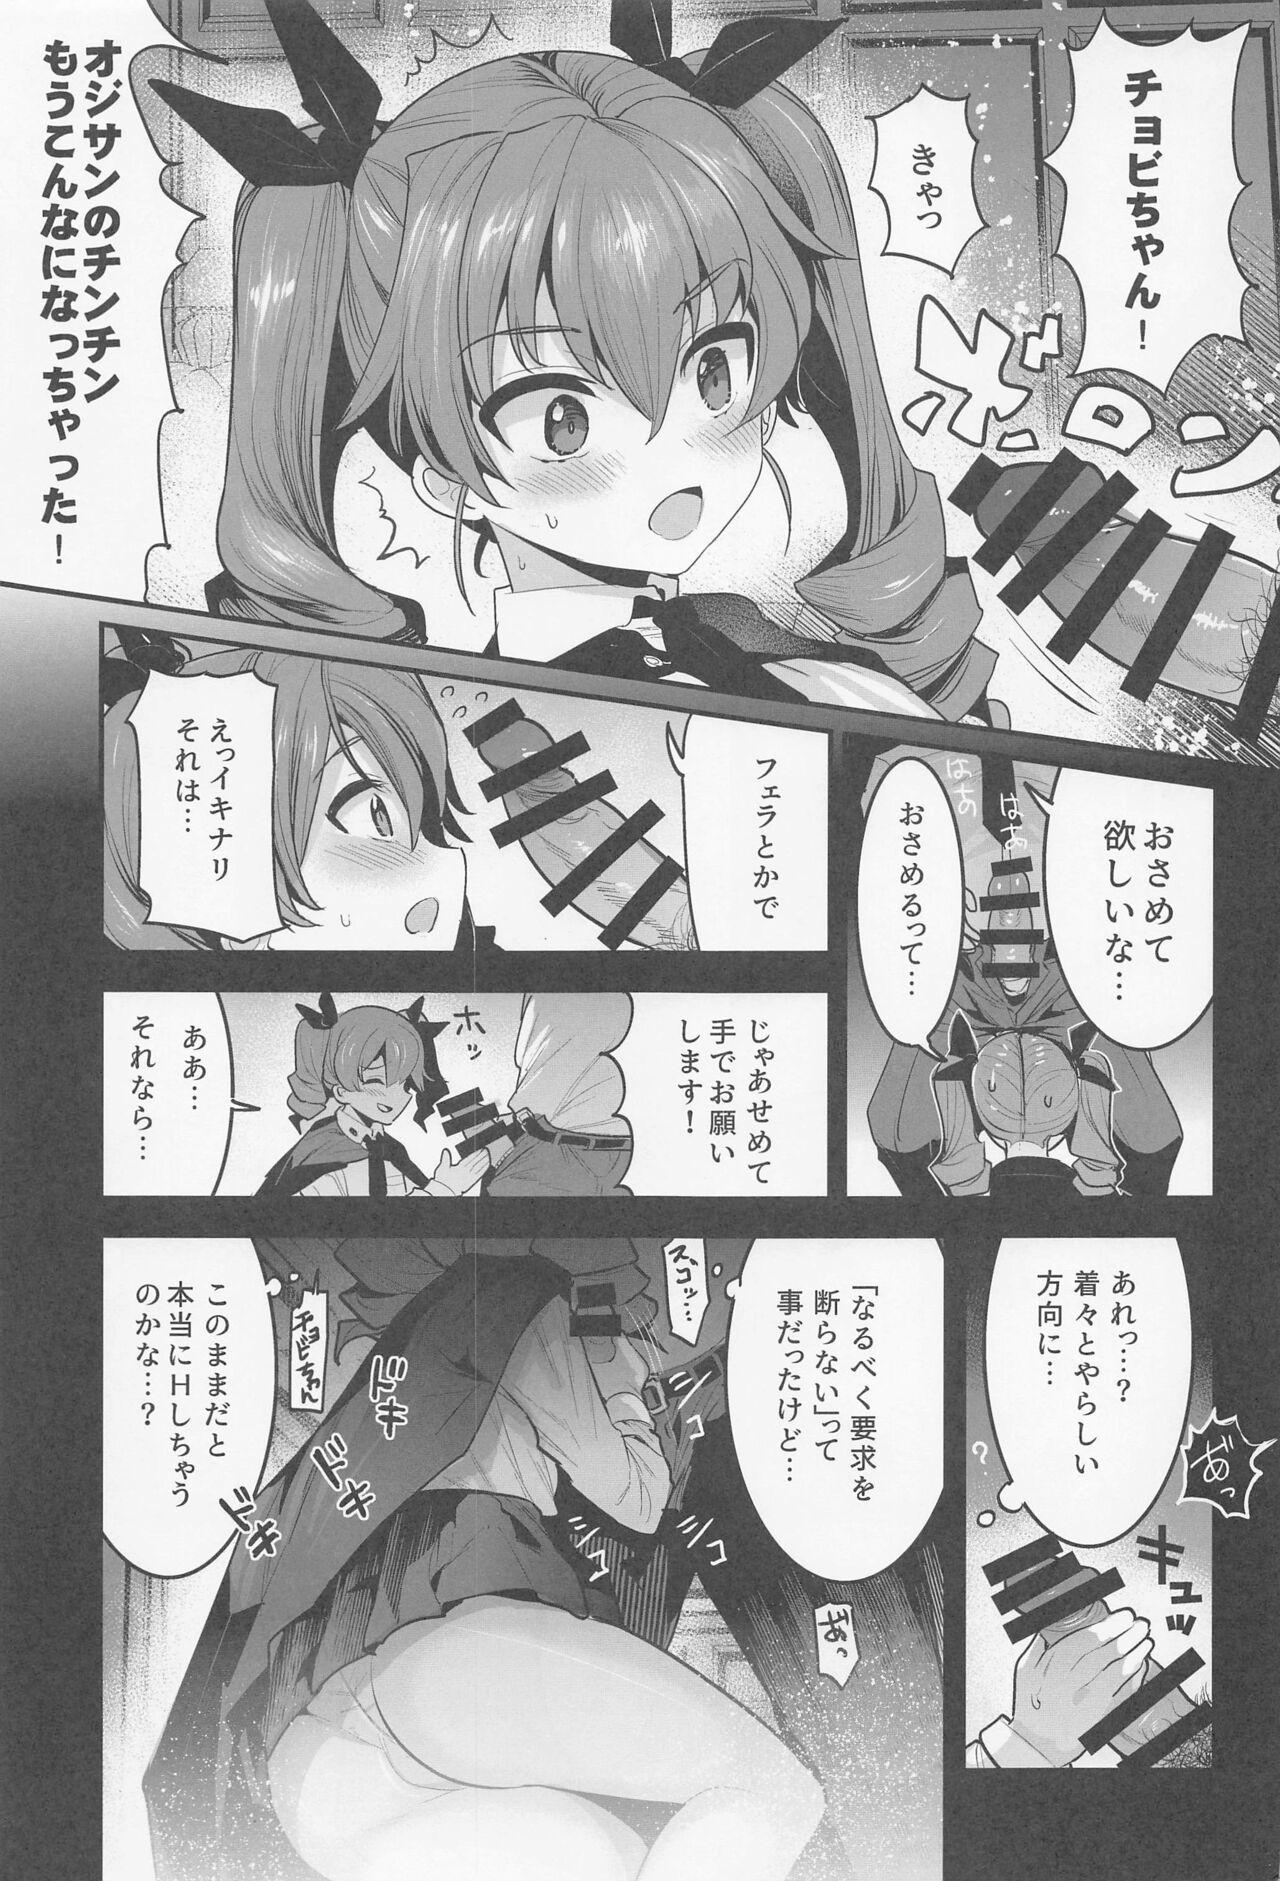 Play anchobi dogezadeonegaishitaraippatsuyarasetekuremashita - Girls und panzer Soft - Page 6